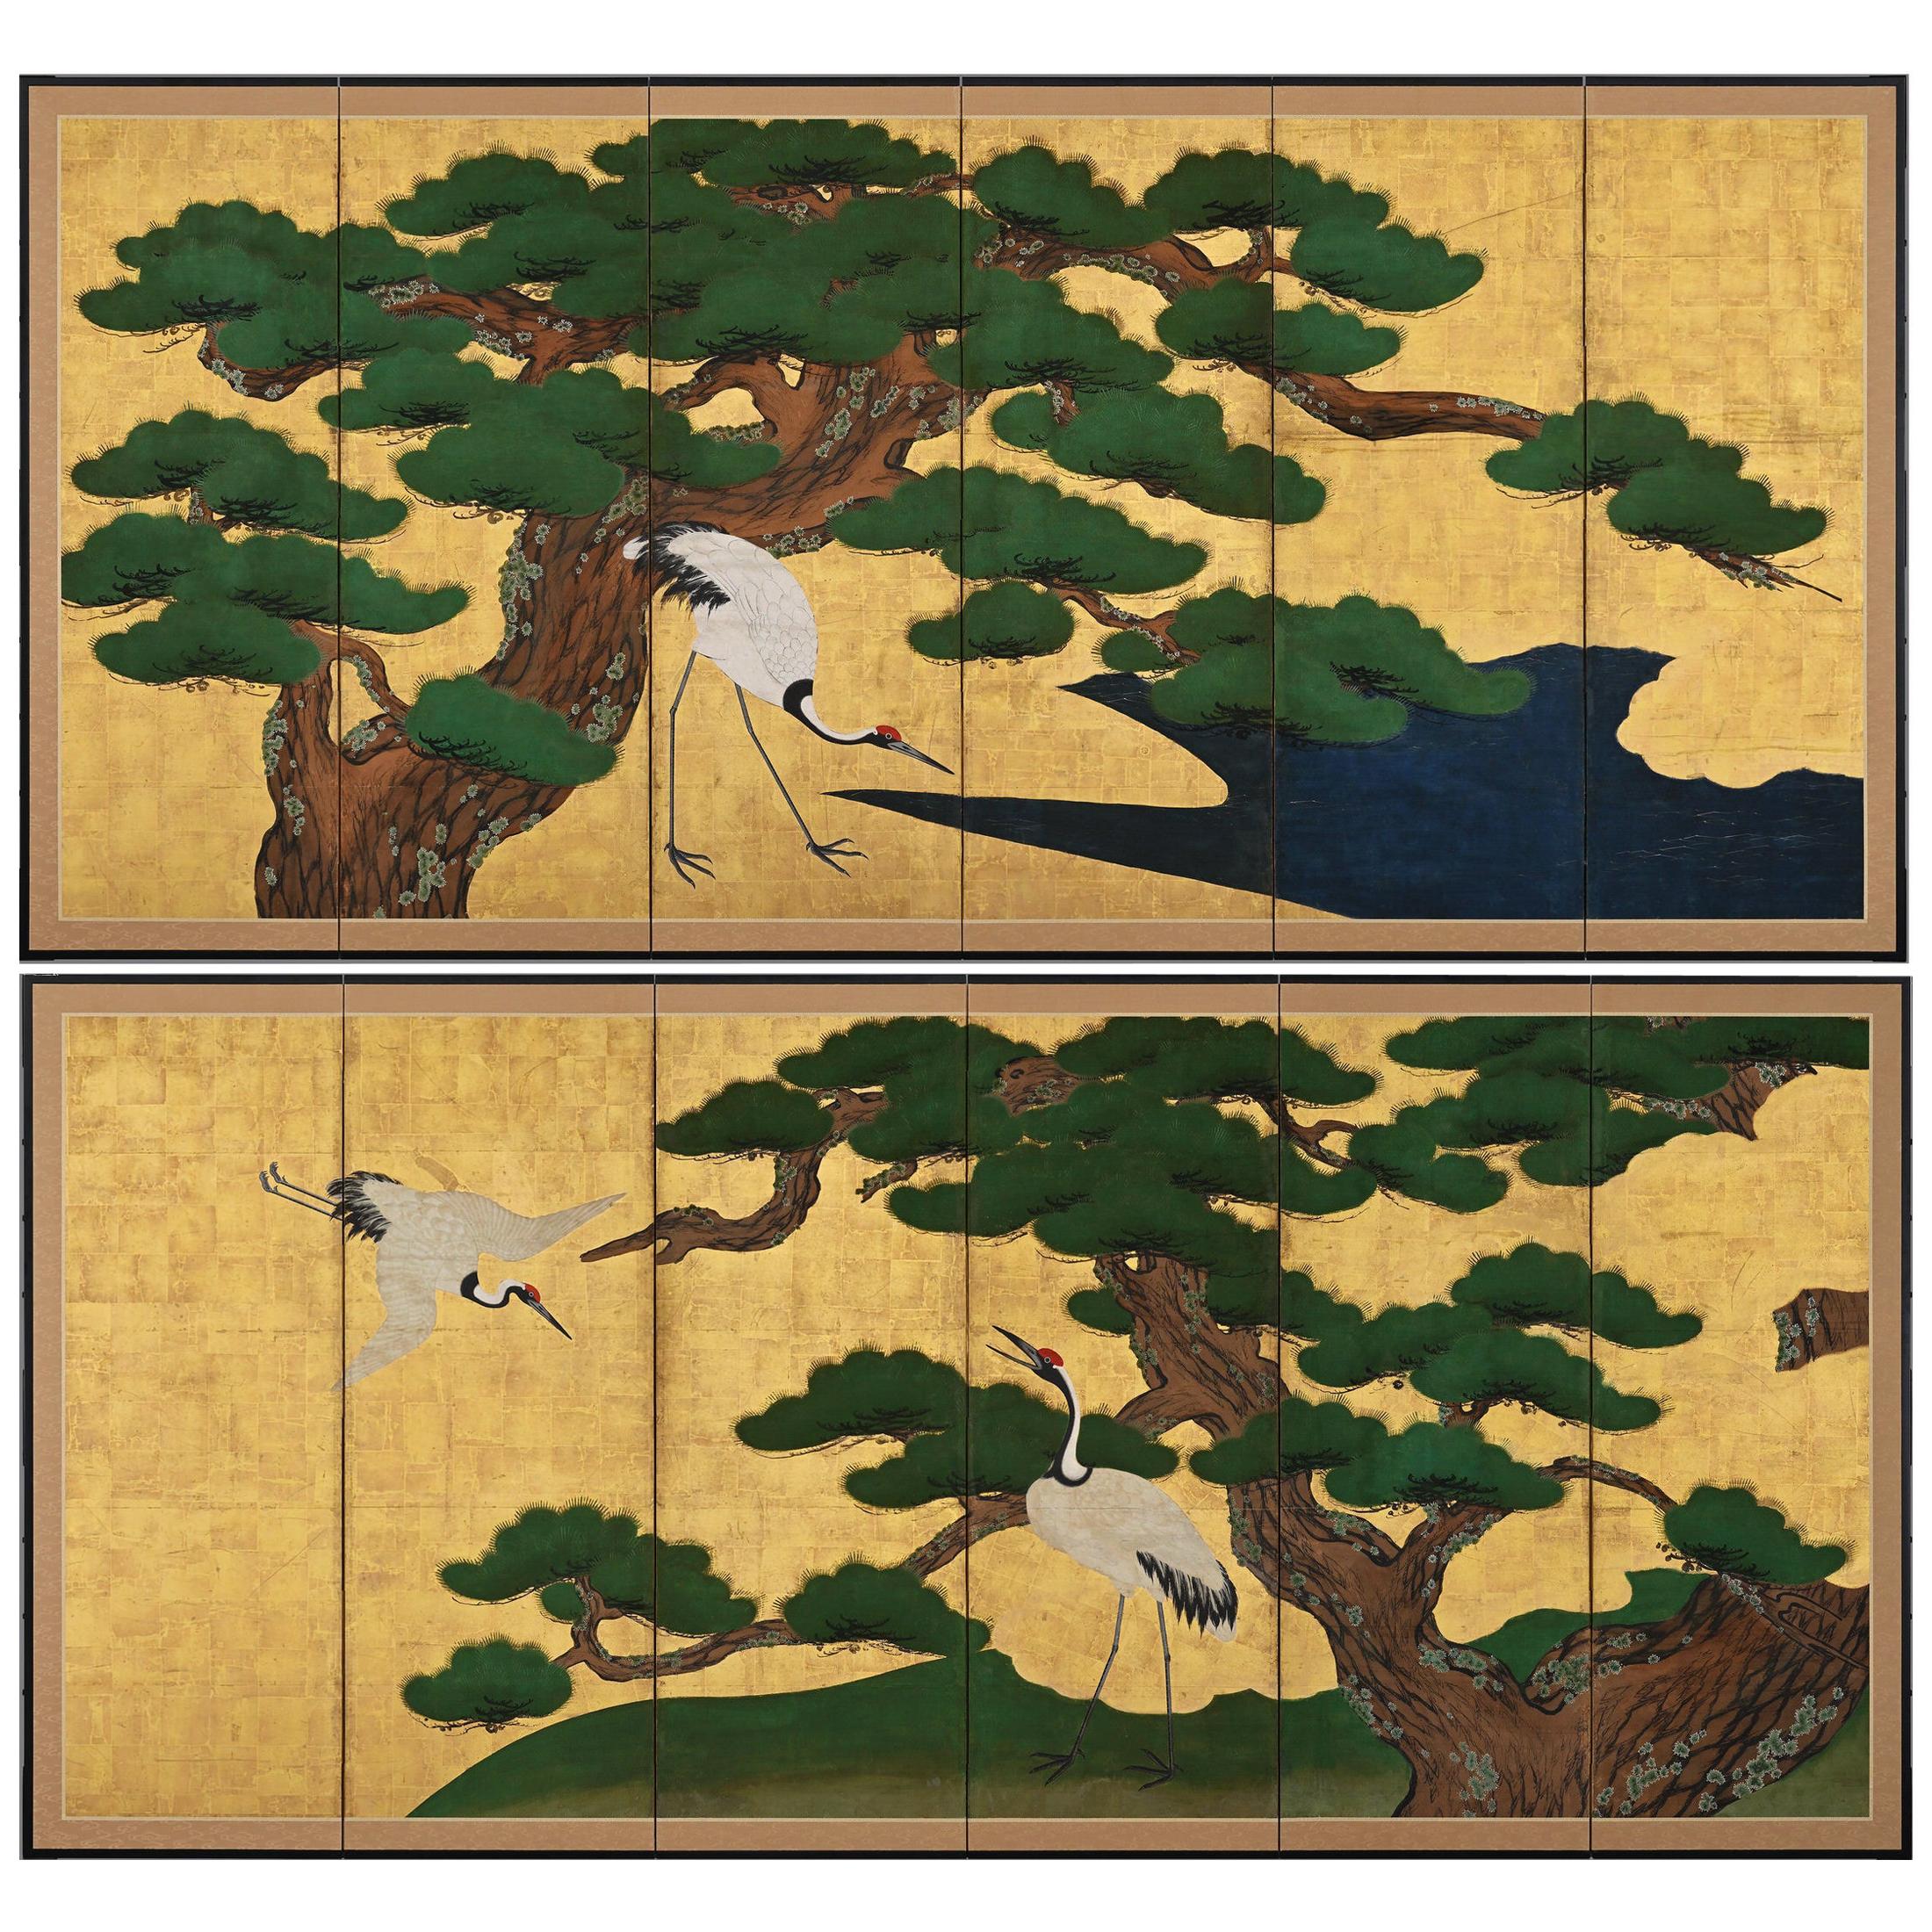 Circa 1700 Japanese Screen Pair, Cranes & Pines, Kyoto Kano School